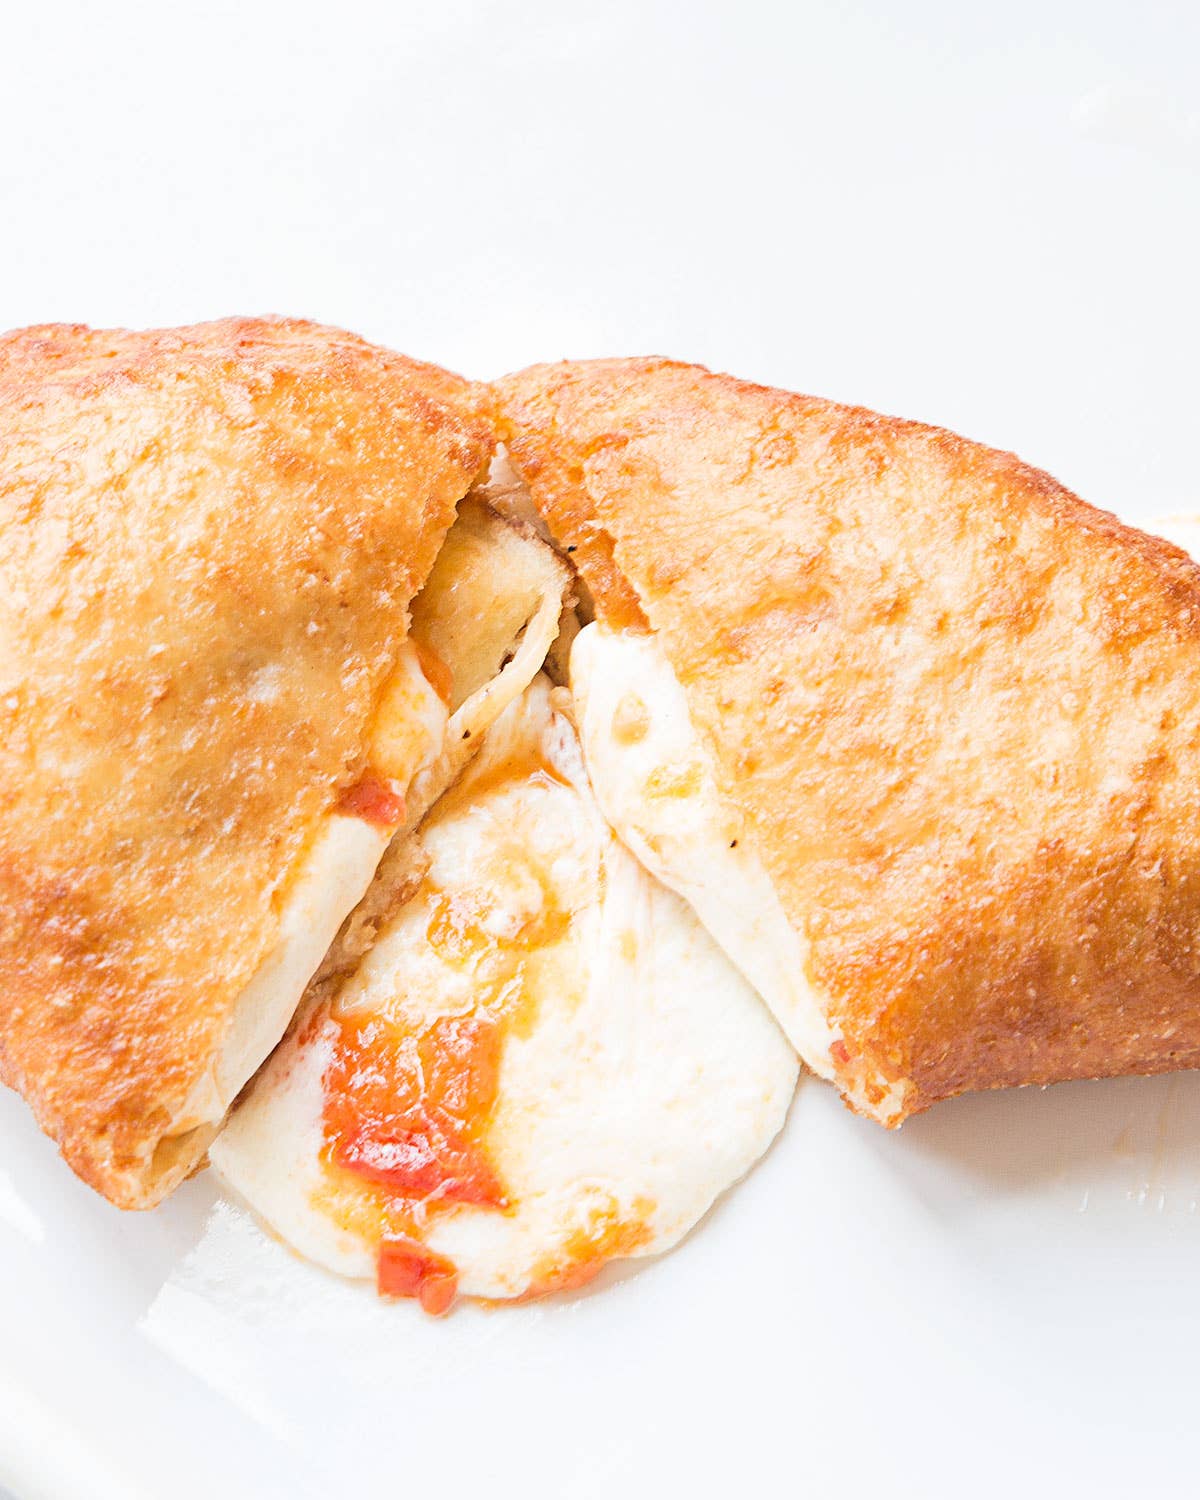 This Fresh Tomato and Mozzarella Panzerotti Recipe is What We Need and Deserve